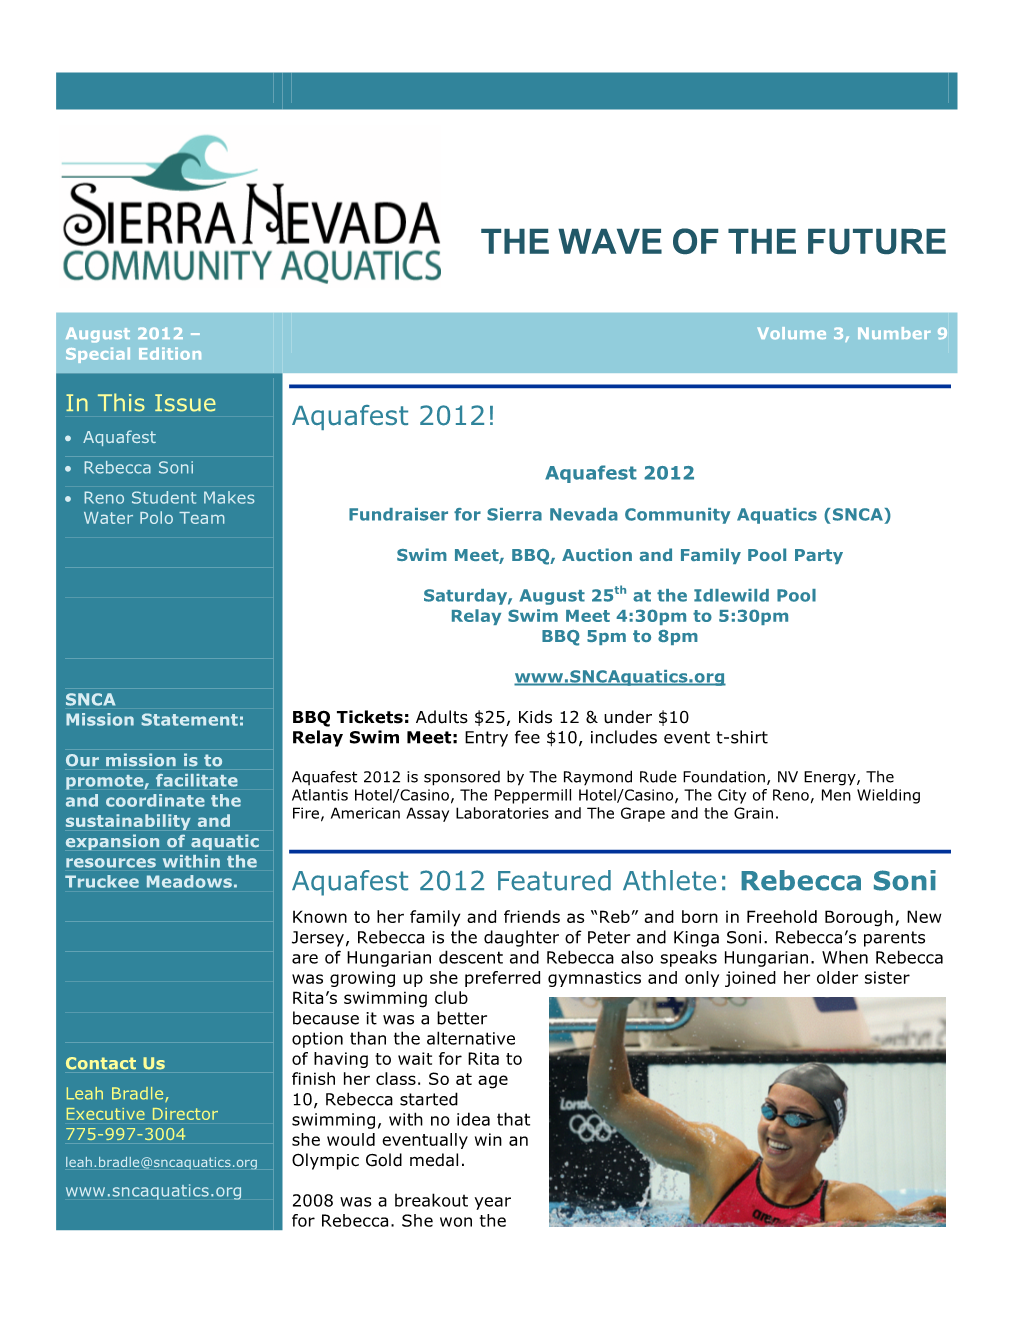 Rebecca Soni Aquafest 2012 • Reno Student Makes Water Polo Team Fundraiser for Sierra Nevada Community Aquatics (SNCA)